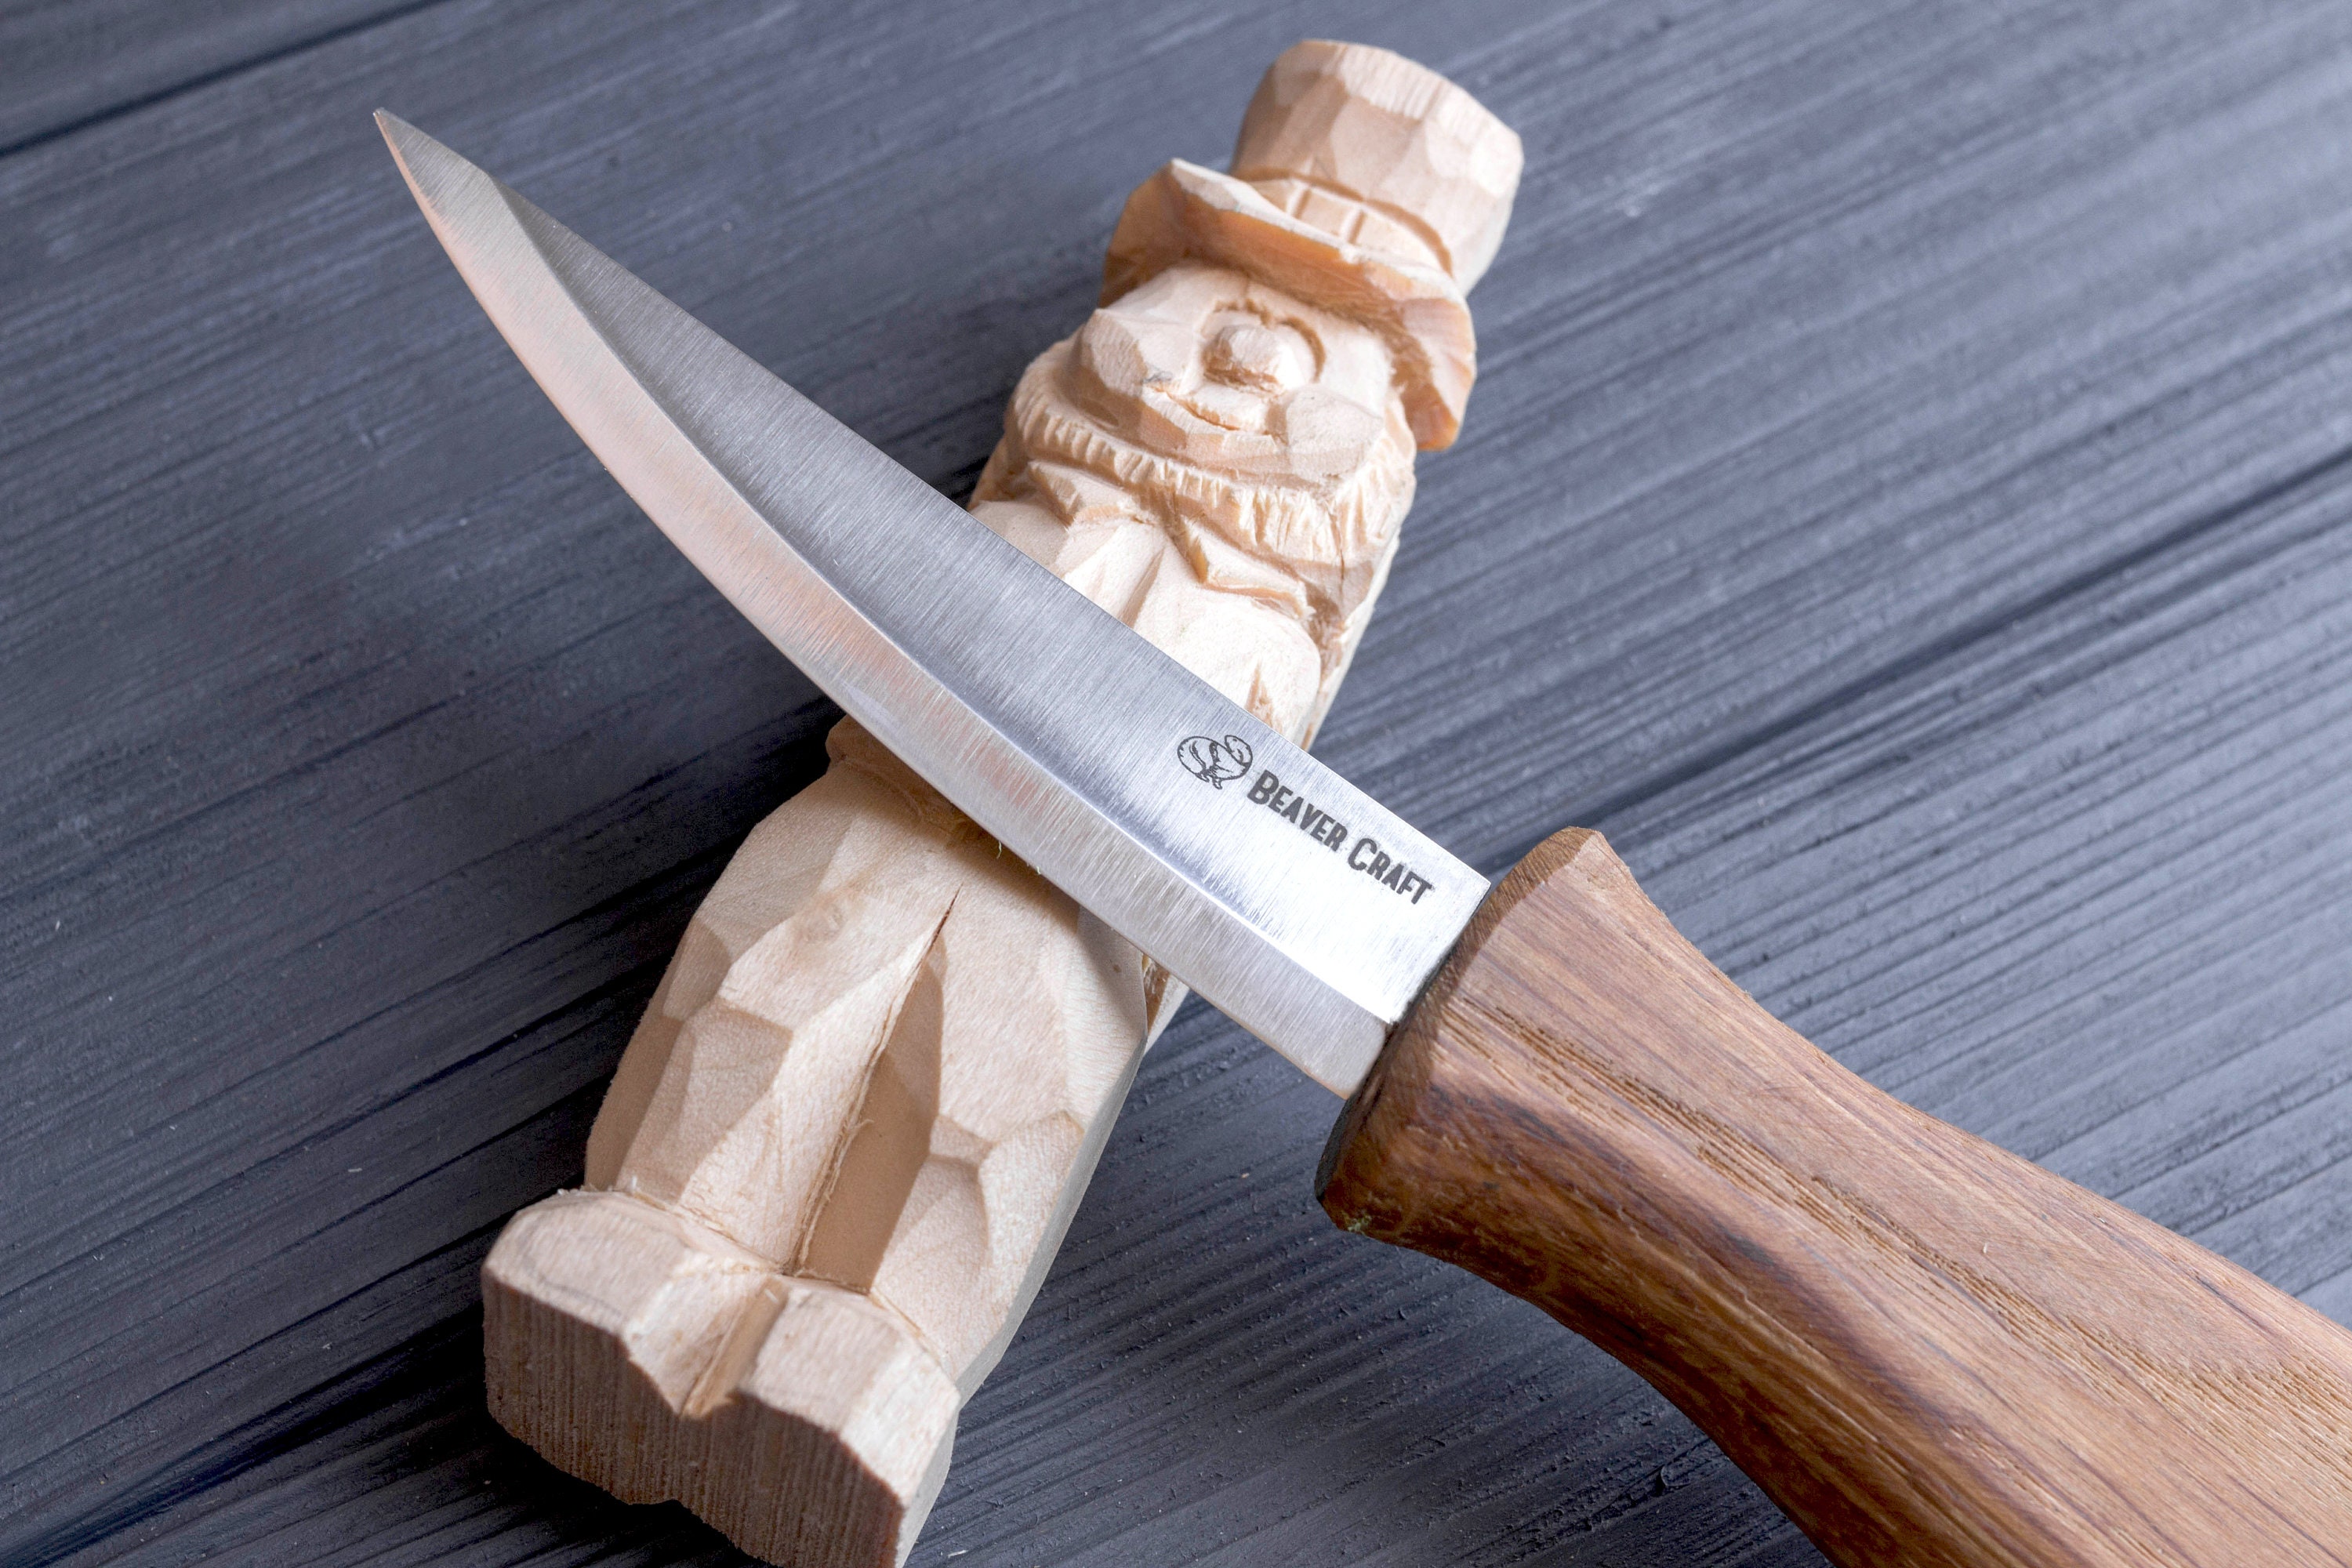 80mm Slojd knife, Whittling knife, Fresh wood carving, Handcarving - The  Spoon Crank